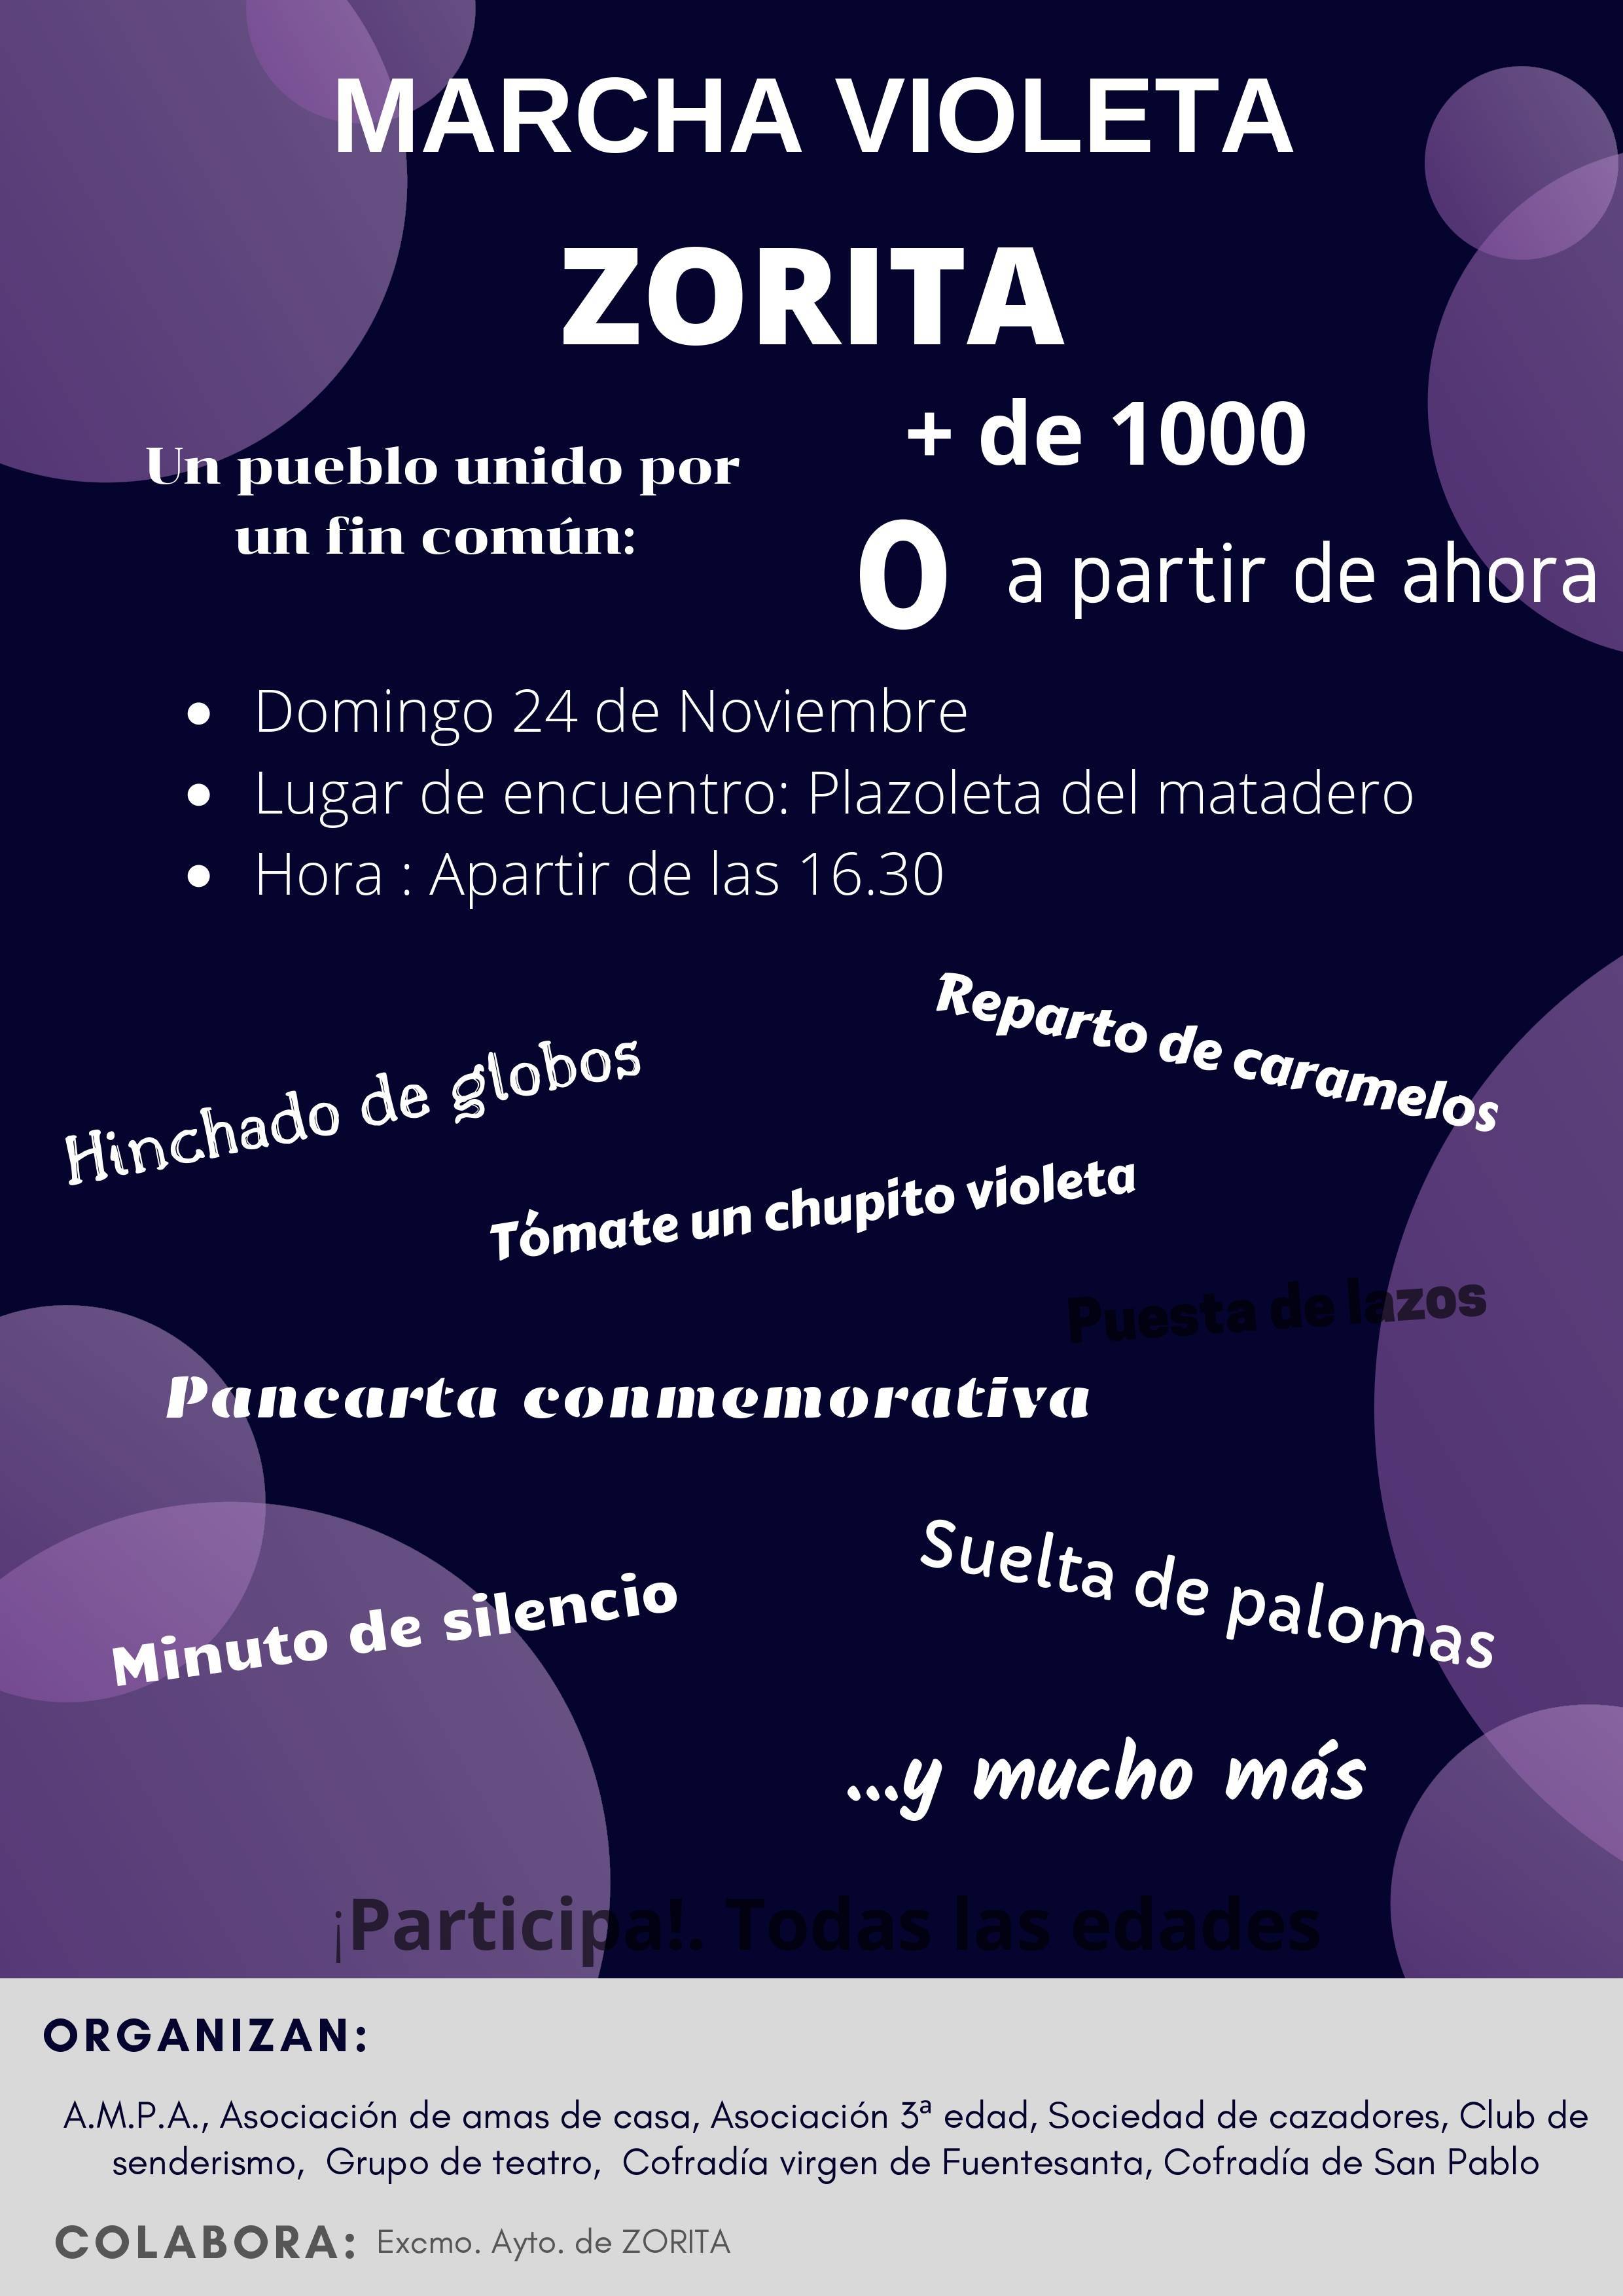 Marcha violeta 2019 - Zorita (Cáceres)